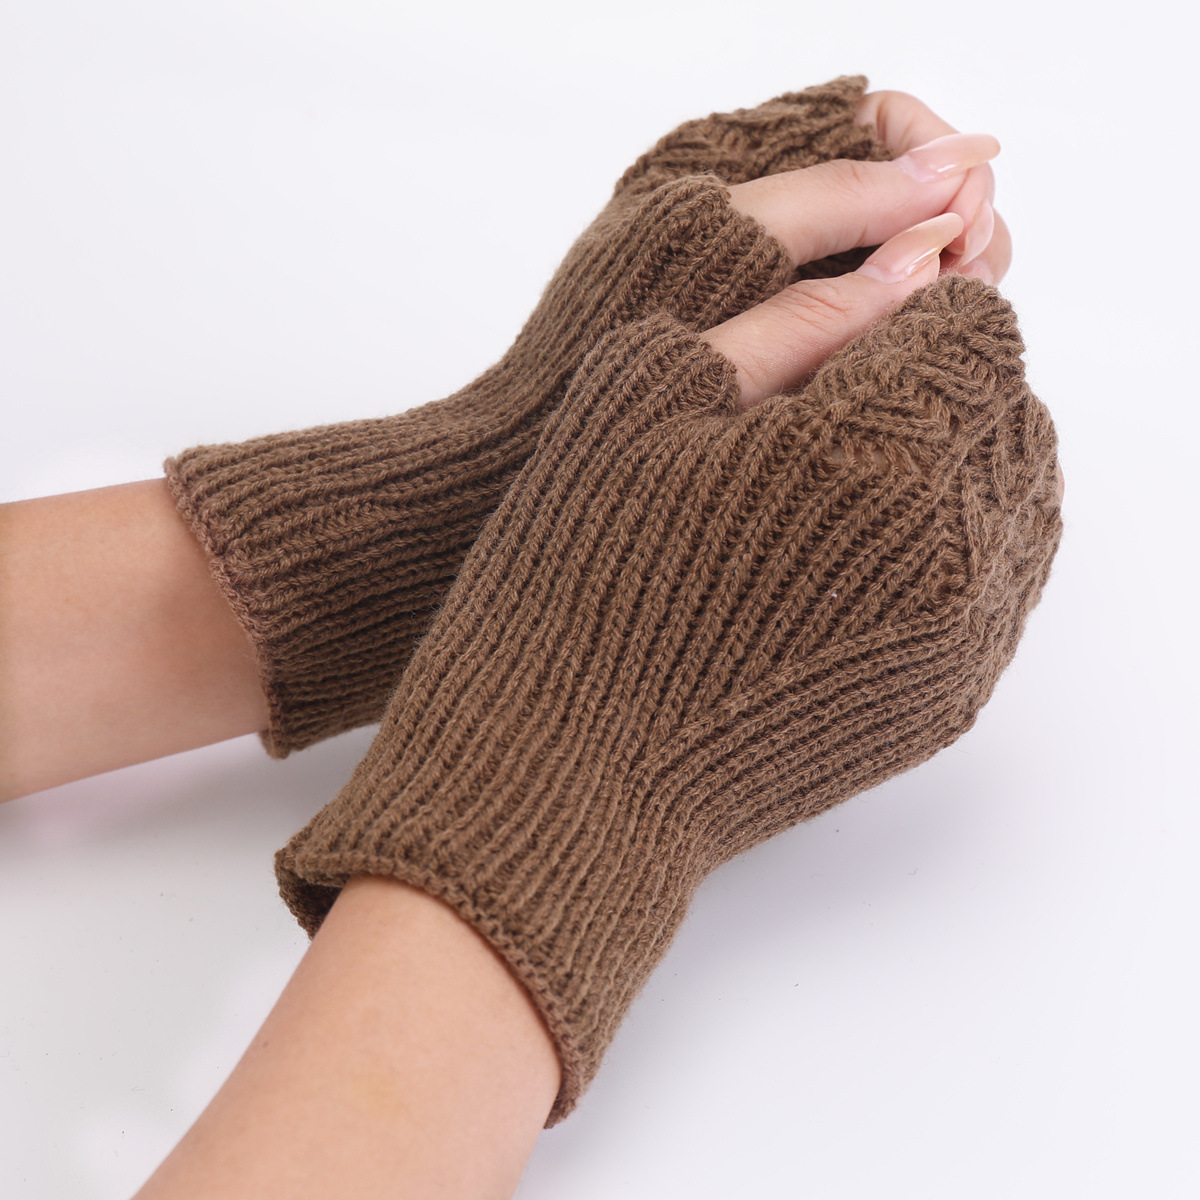 PMUYBHF Fingerless Gloves for Women Warm Ladies Fashion Warm